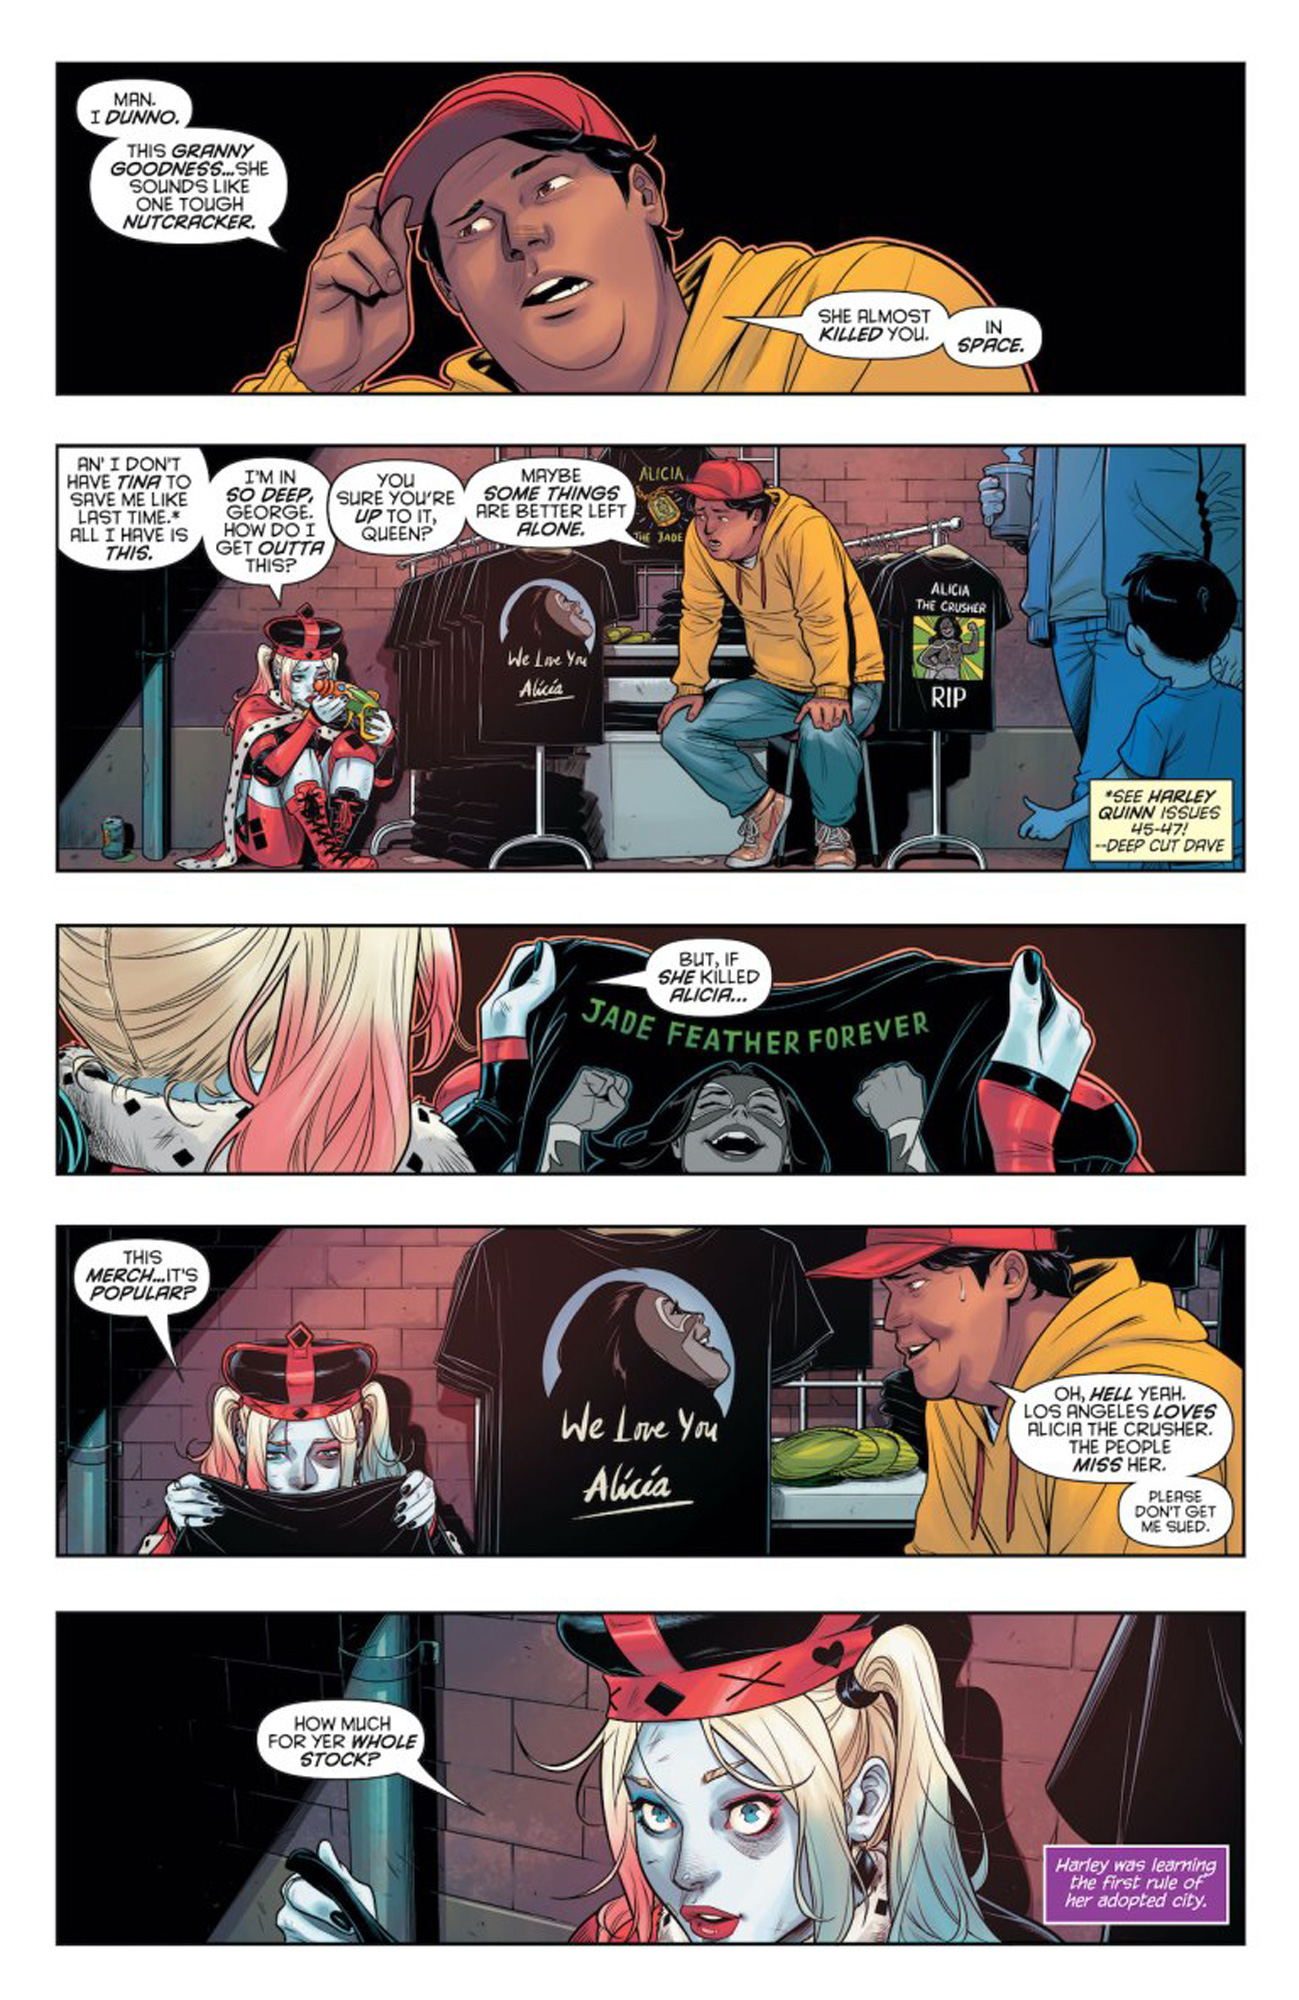 Harley Quinn #74